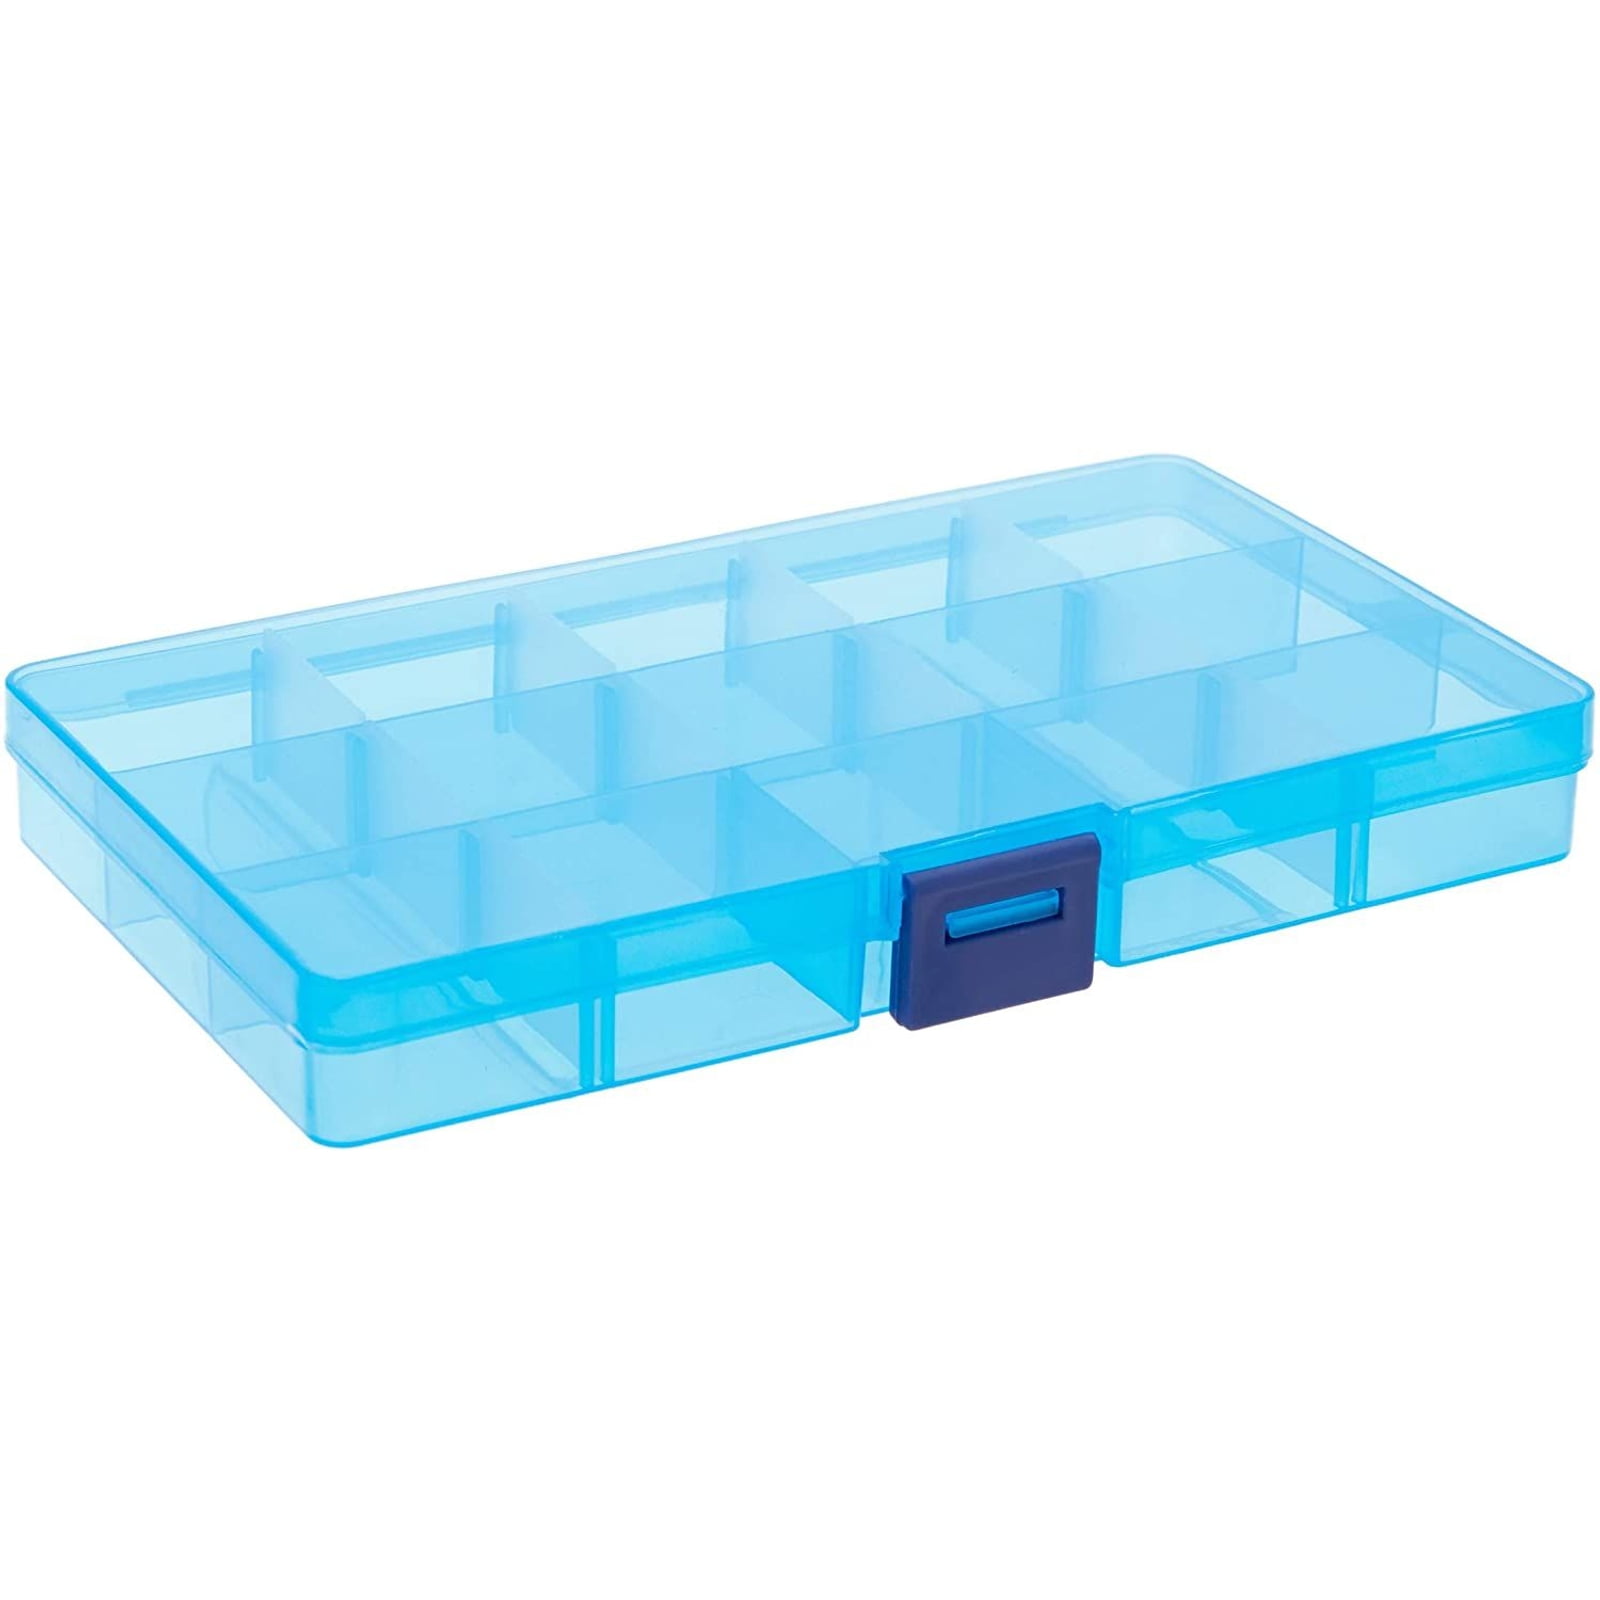 Jigitz Plastic Jewelry Organizer Box 8pk Plastic Organizer Box with Dividers, Size: Small